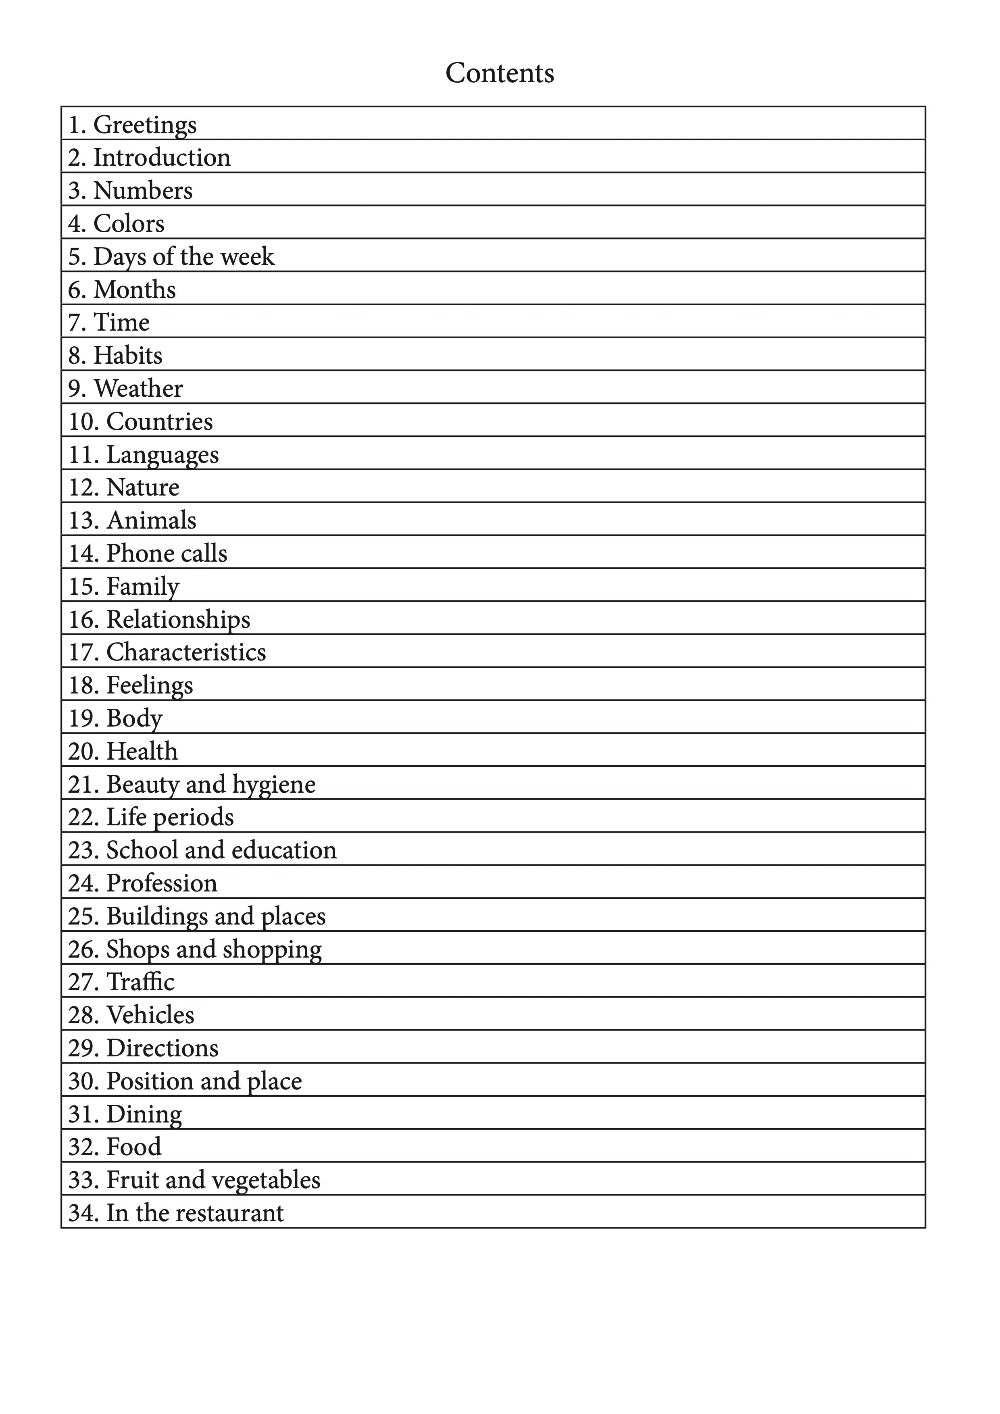 Kikuyu language learning notebook contents page 1